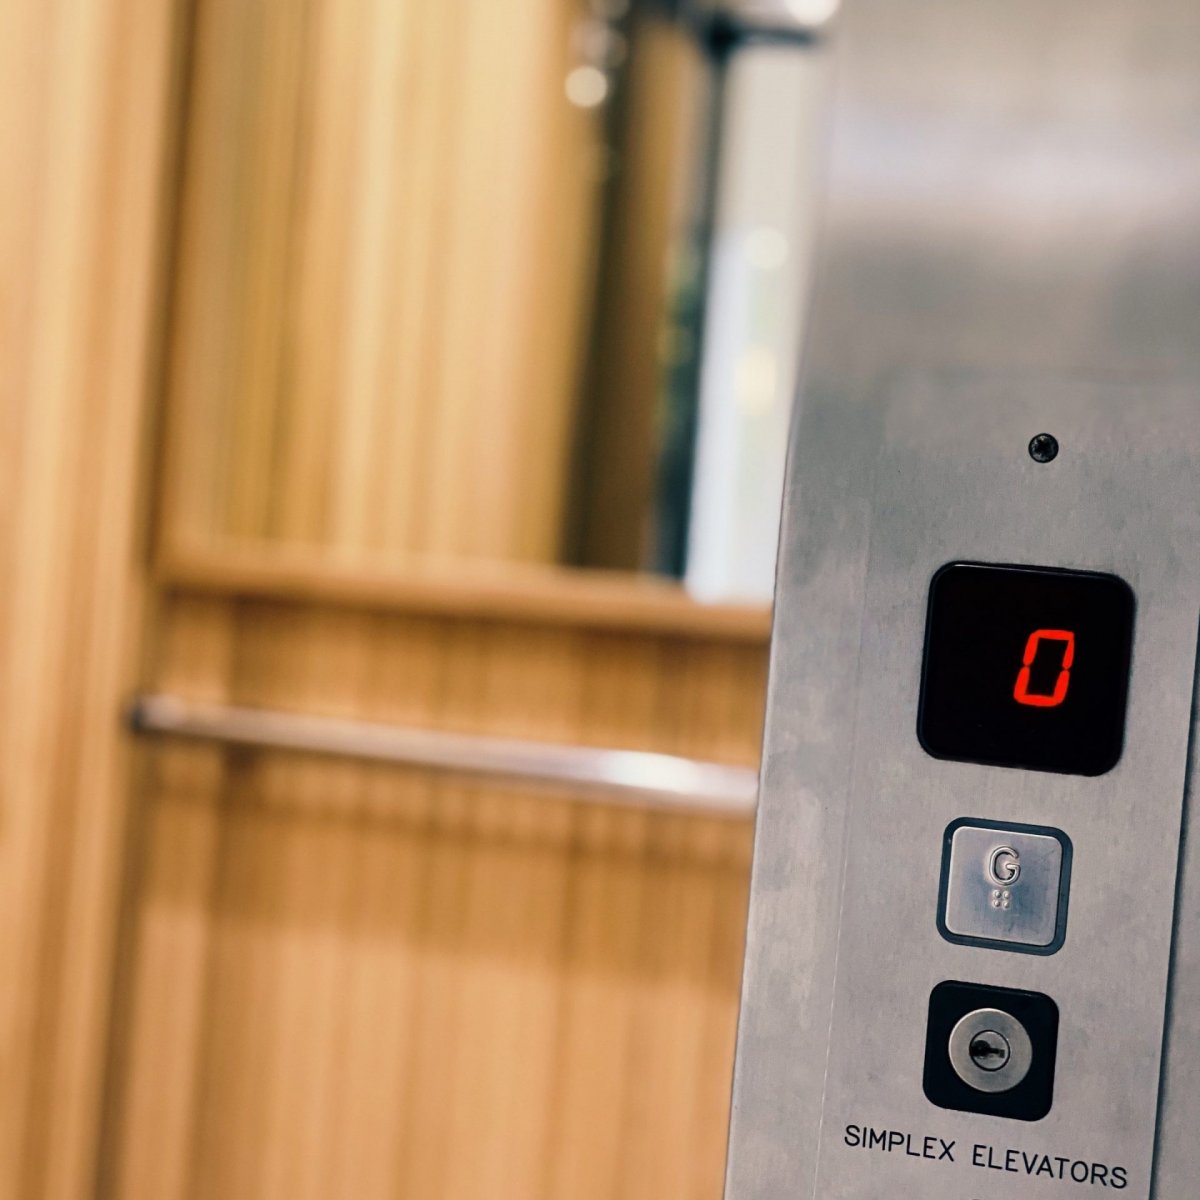  Commercial Elevators Brisbane | Simplex Elevators Gallery Image 2